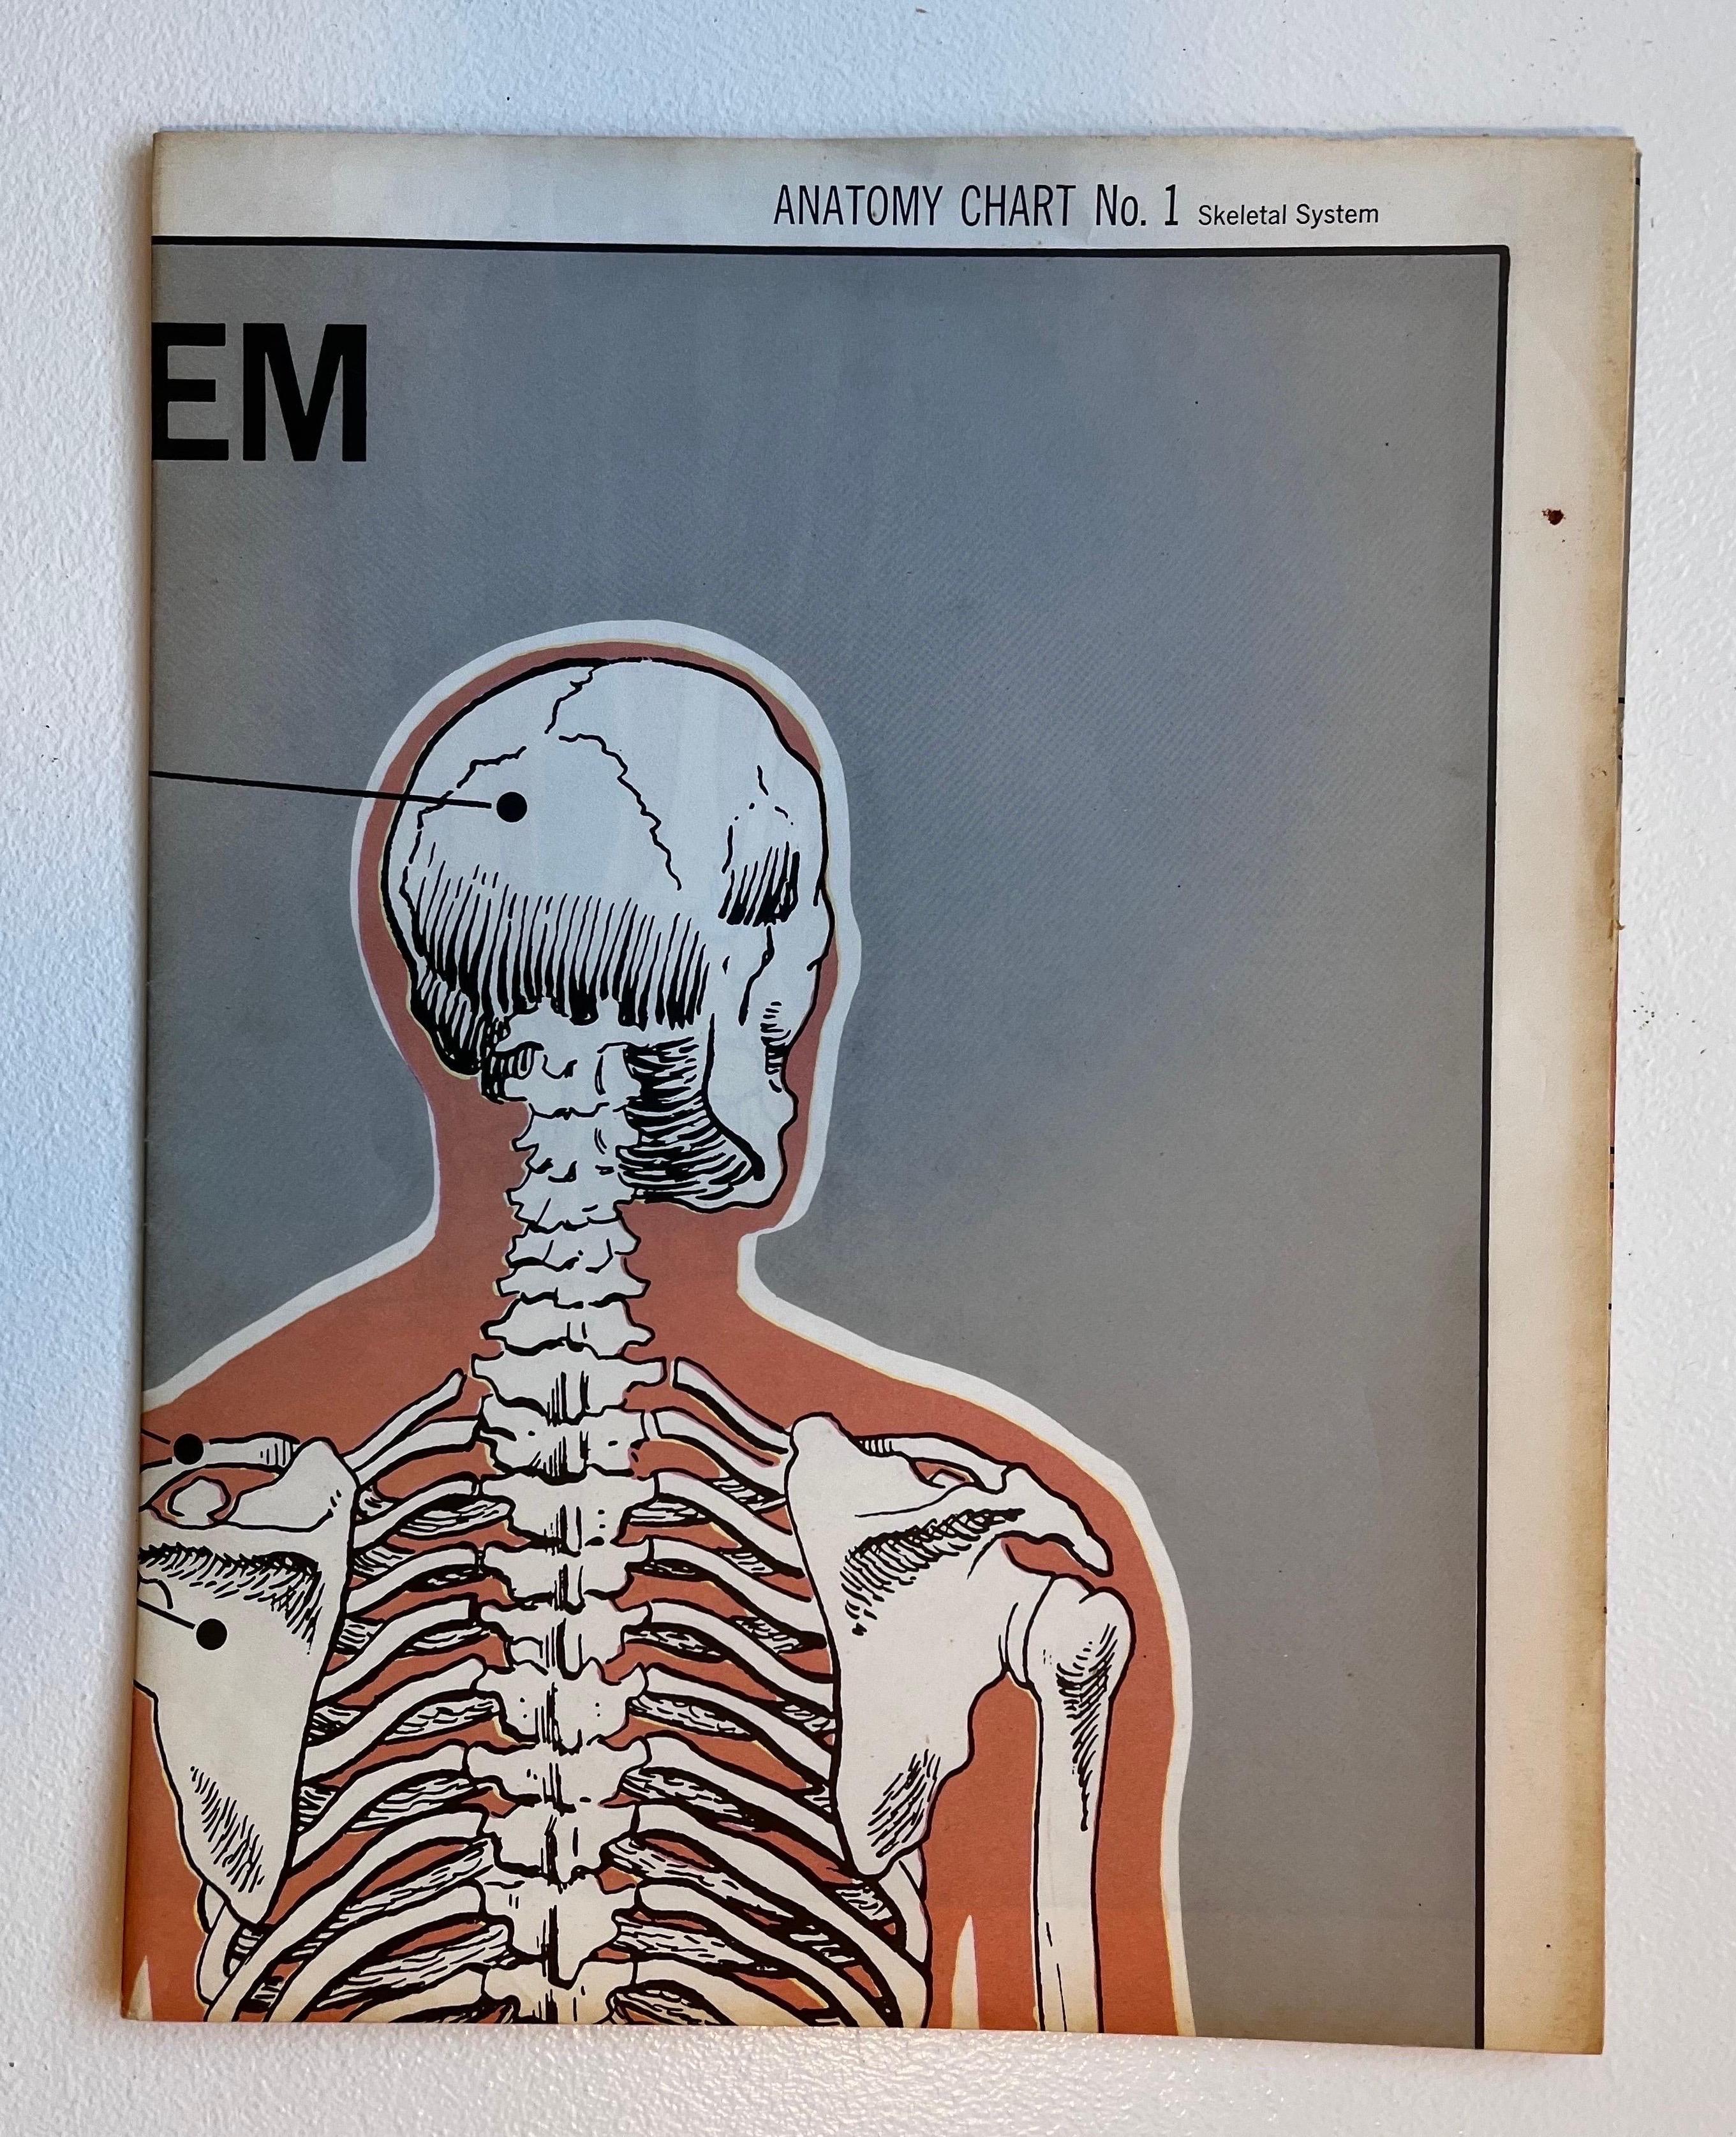 Das Skelettsystem Poster von American Map Co. - Circa 1950.

29